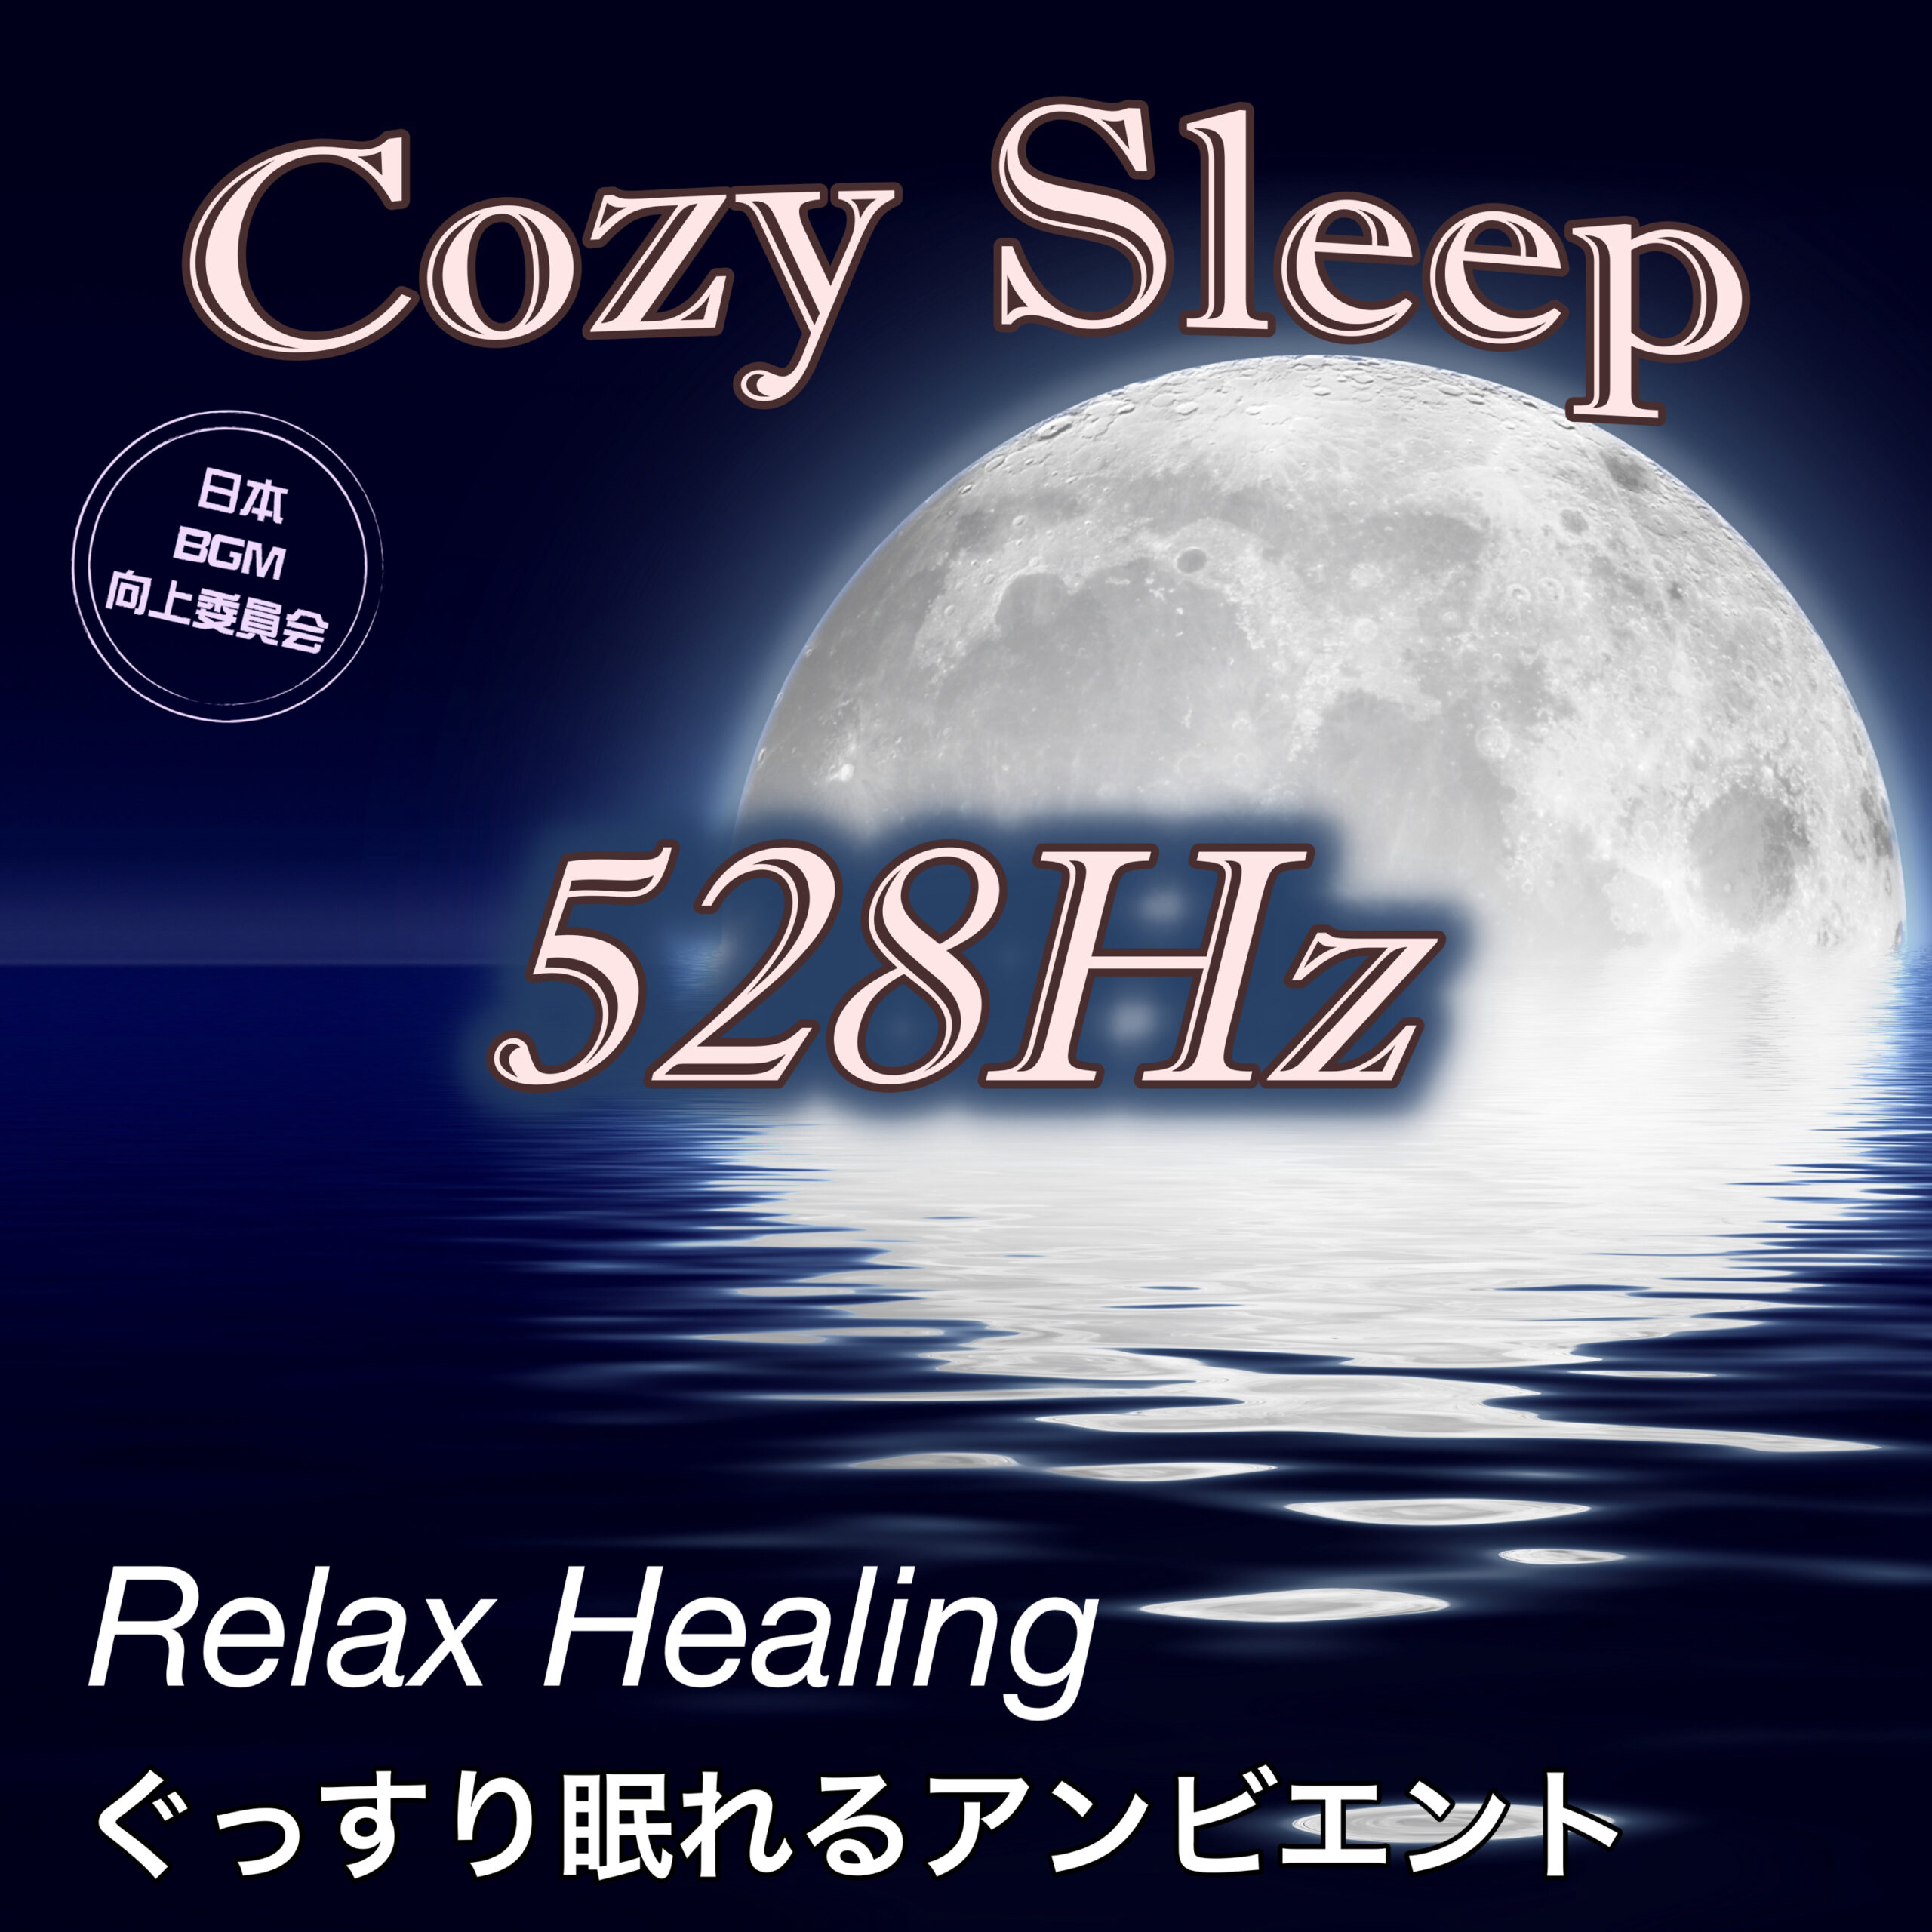 Cozy Sleep 528Hz Relax Healing ぐっすり眠れるアンビエント